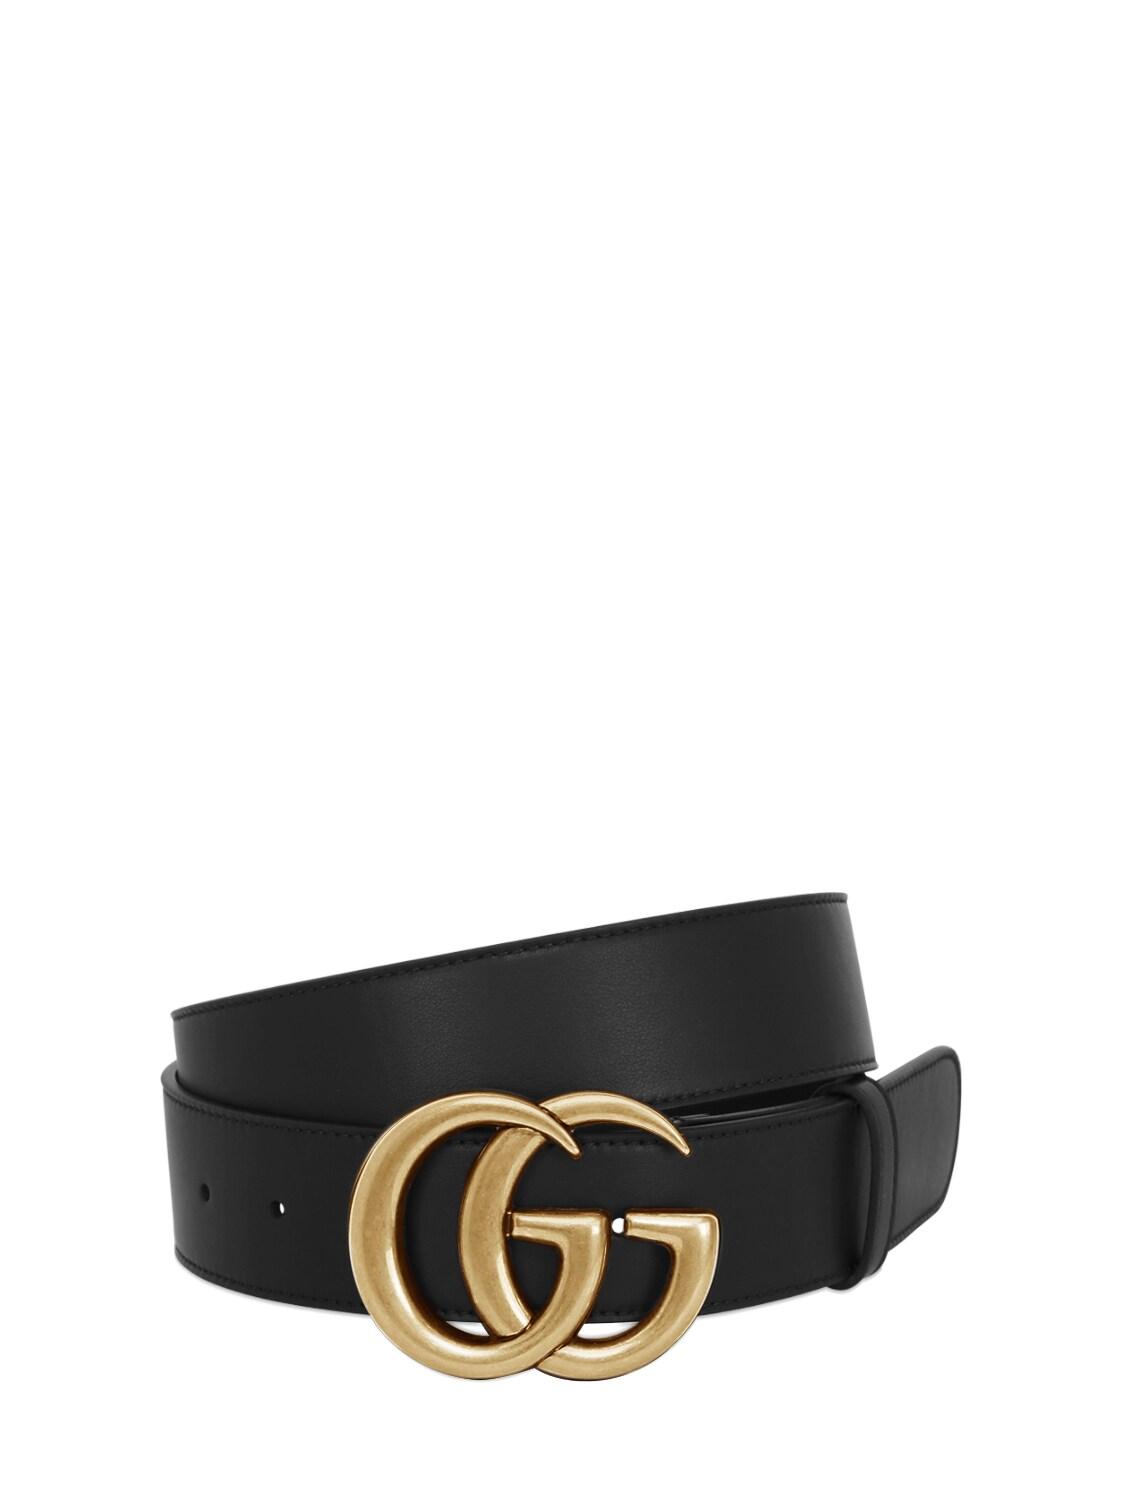 Gucci 40mm Gg Gold Buckle Leather Belt in Black/Gold (Black) for Men - Lyst